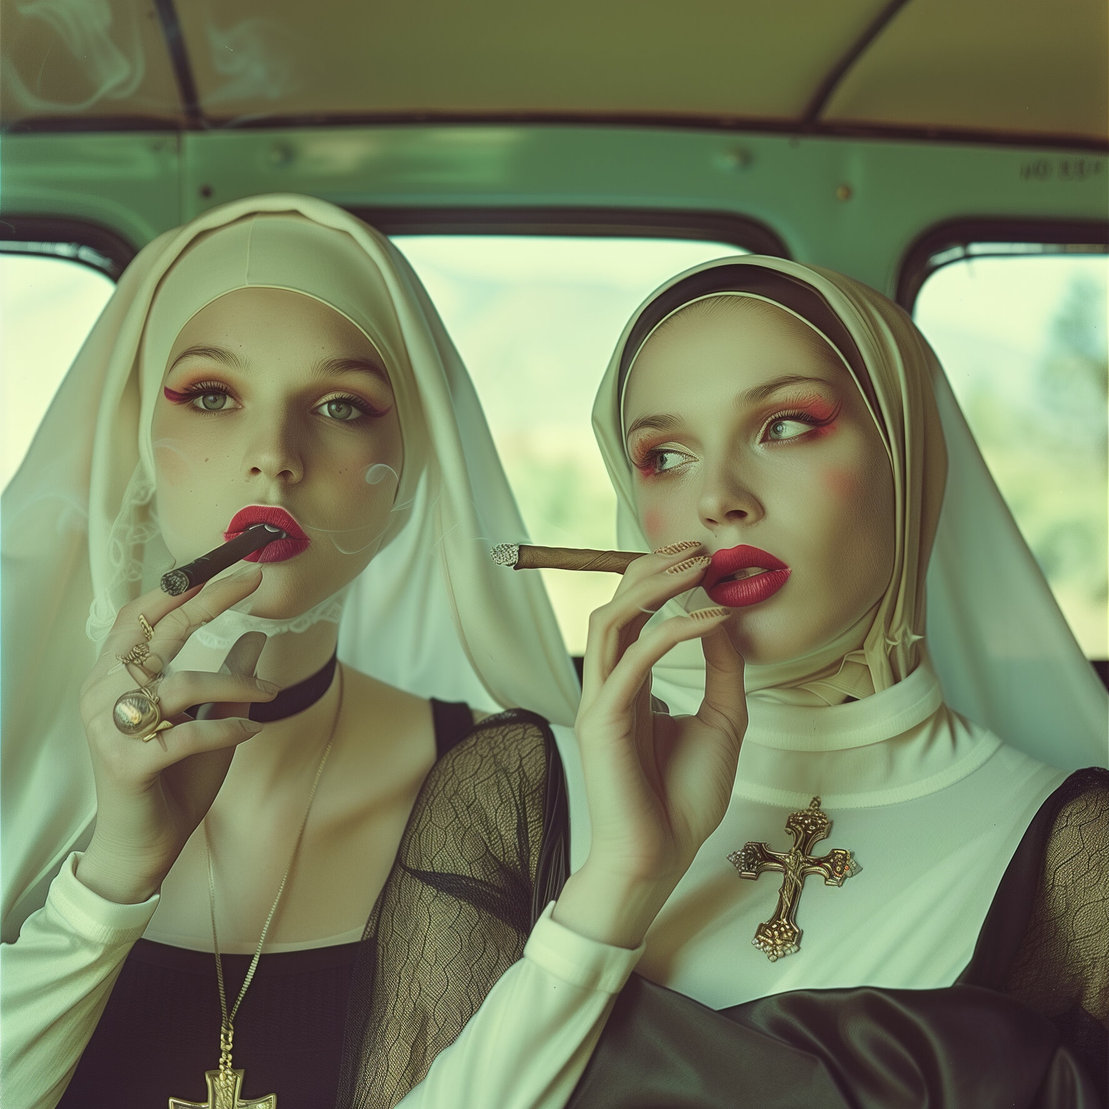 Smokings nuns III